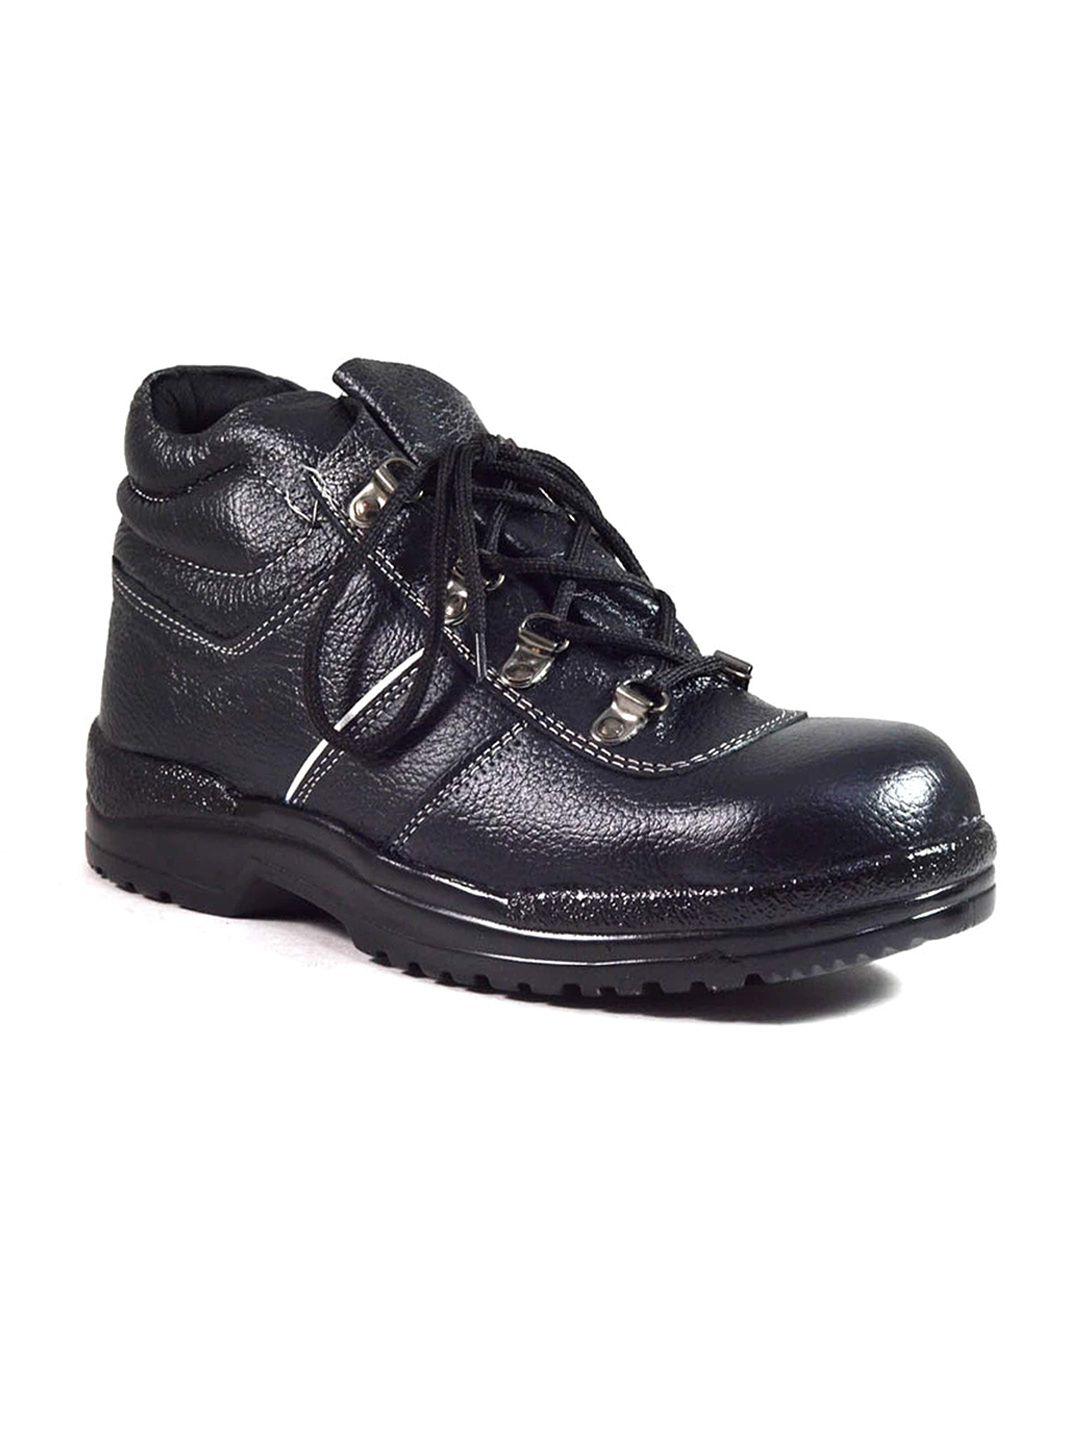 imcolus men textured leather mid-top regular boots